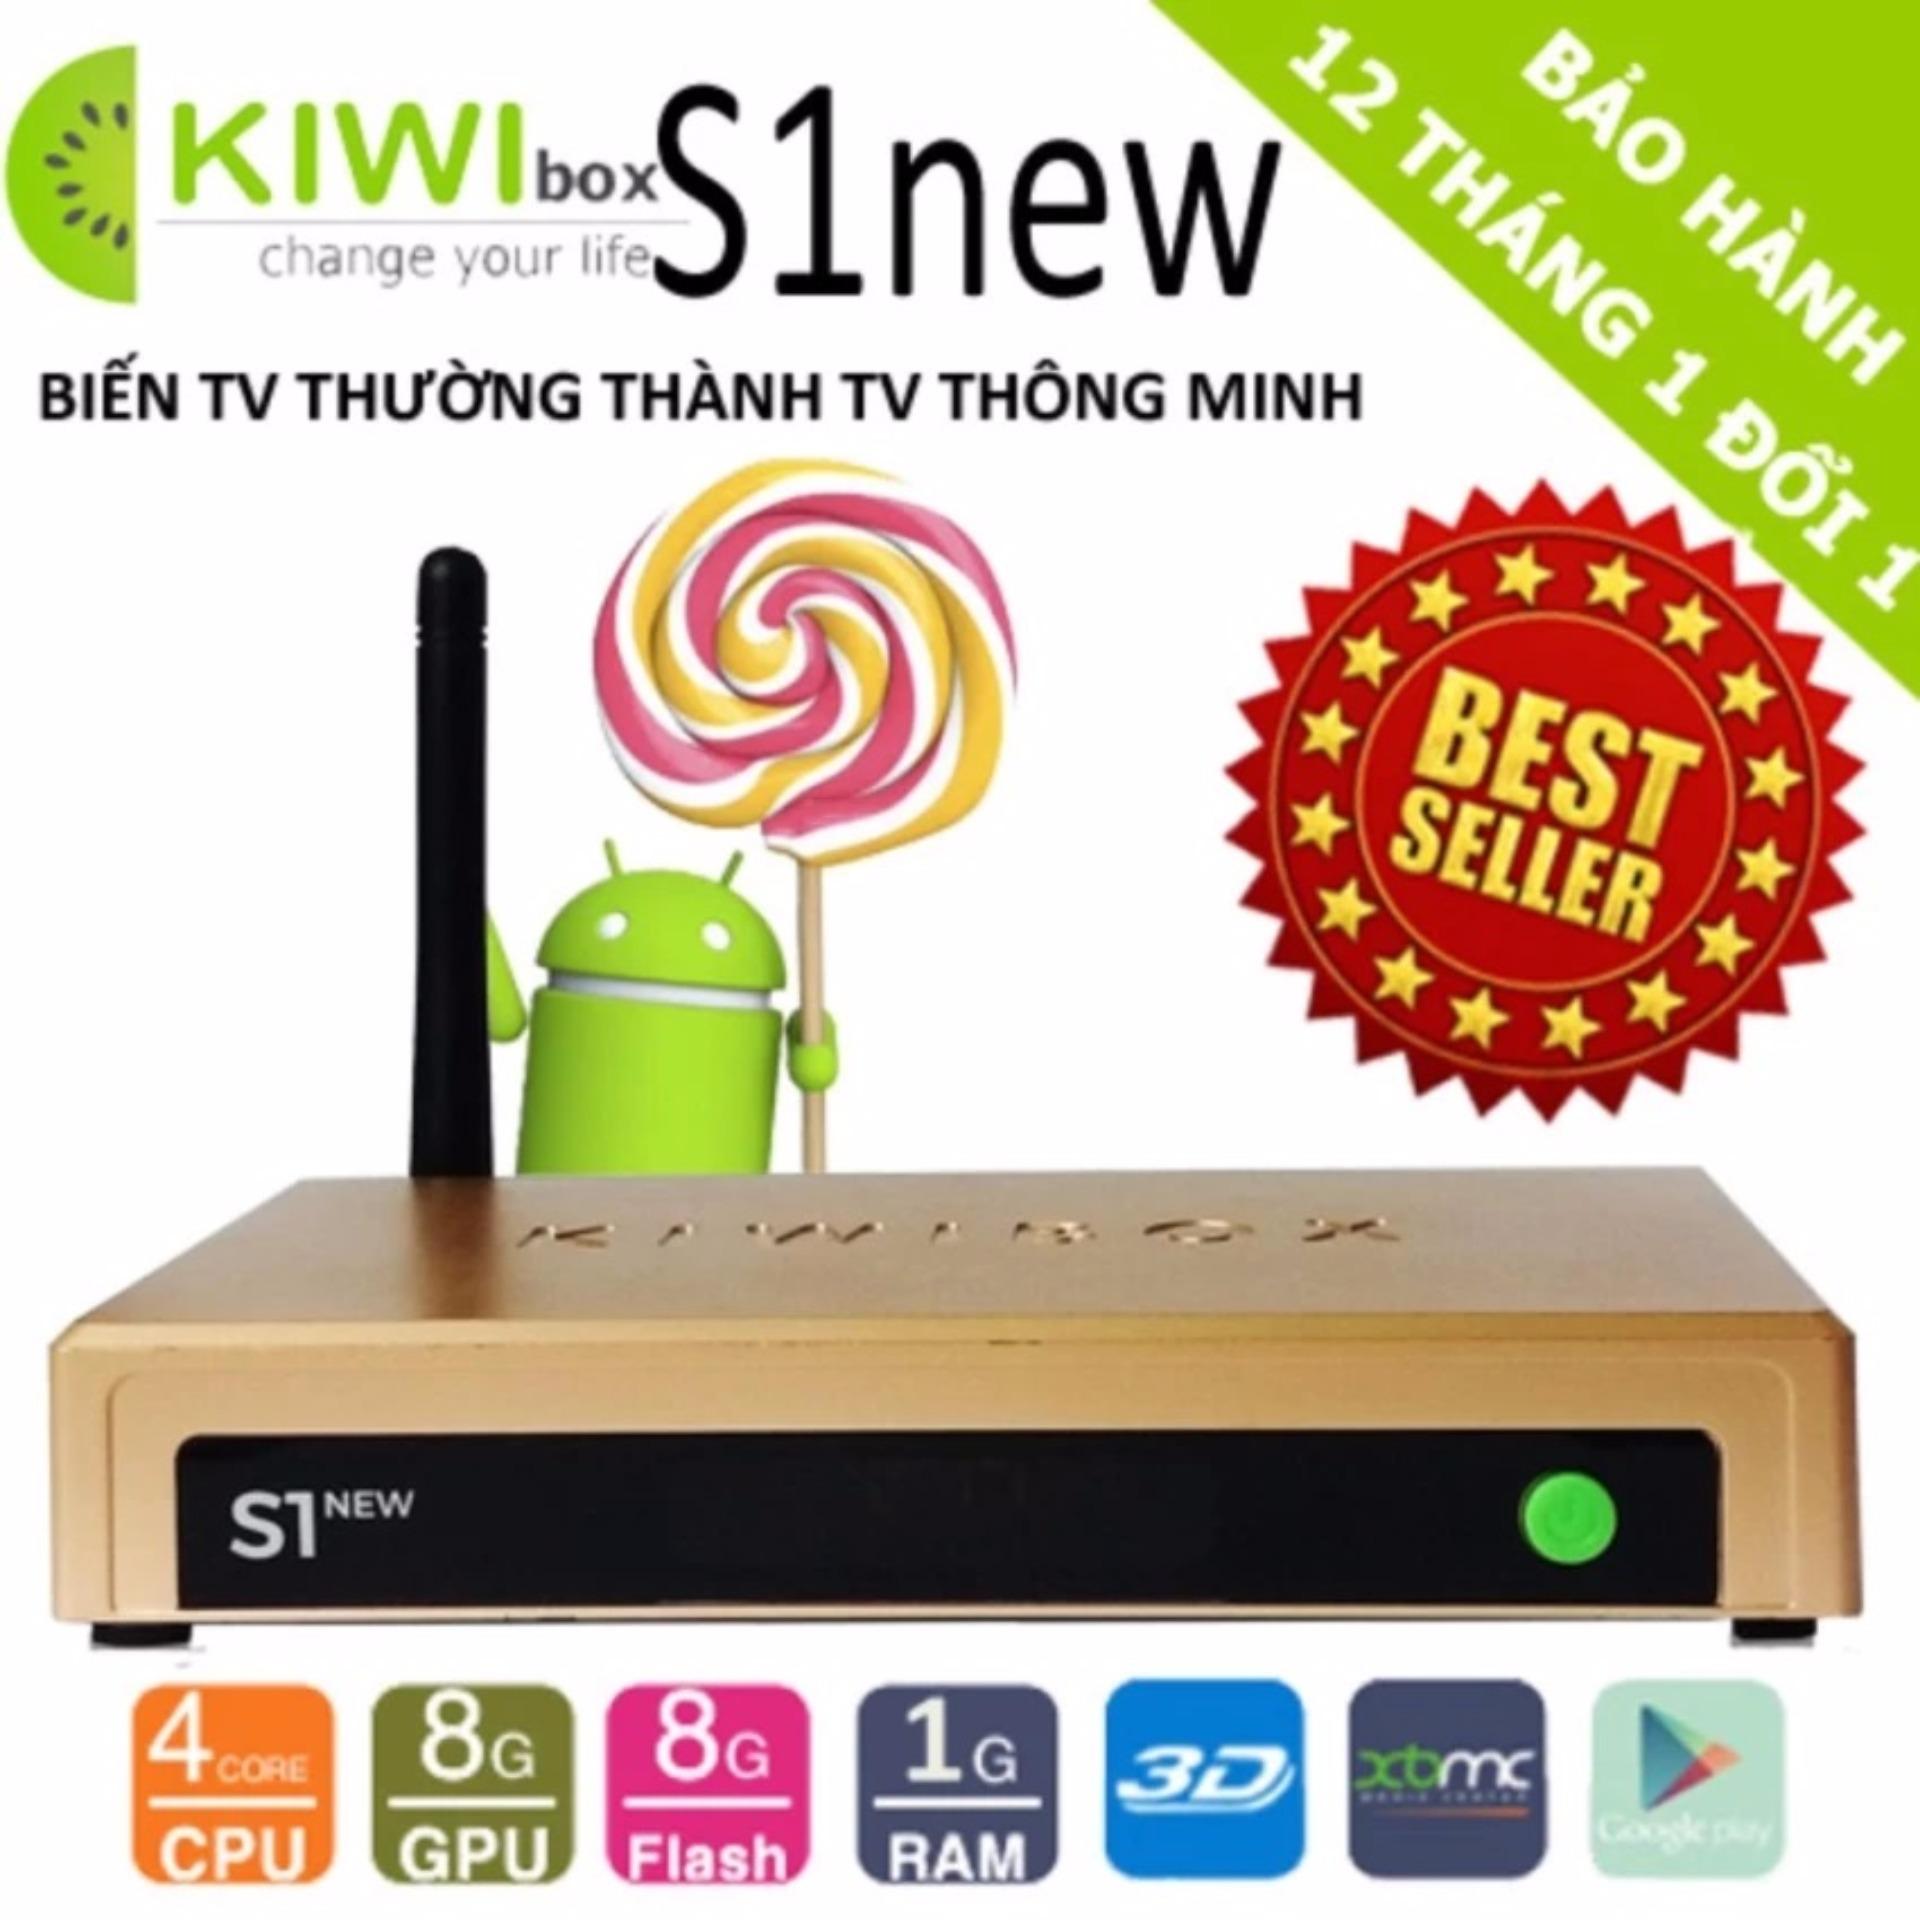 android tivi box kiwibox S1 new ( màu vàng )